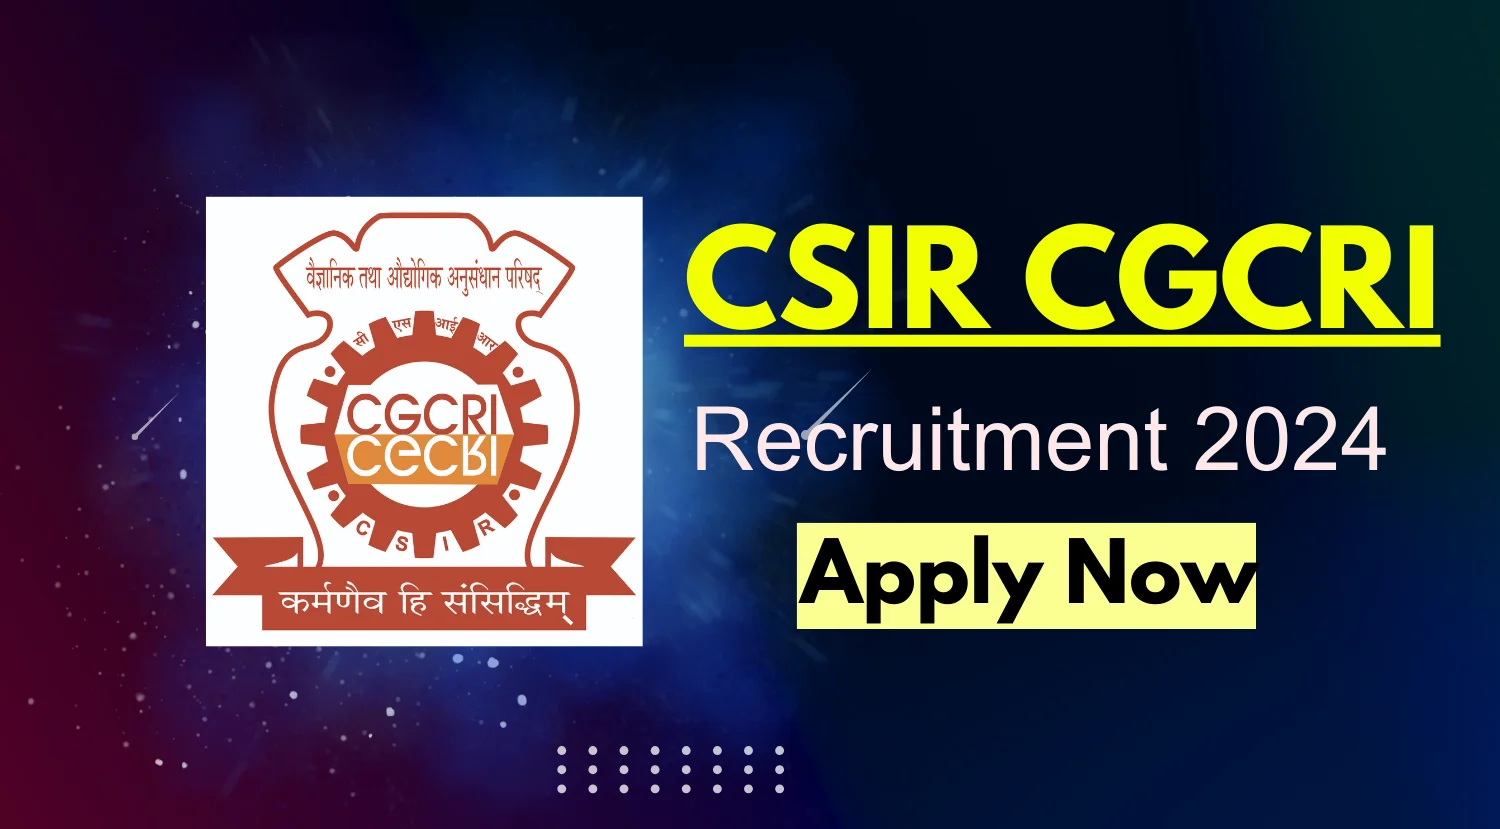 CSIR CGCRI Director Recruitment 2024